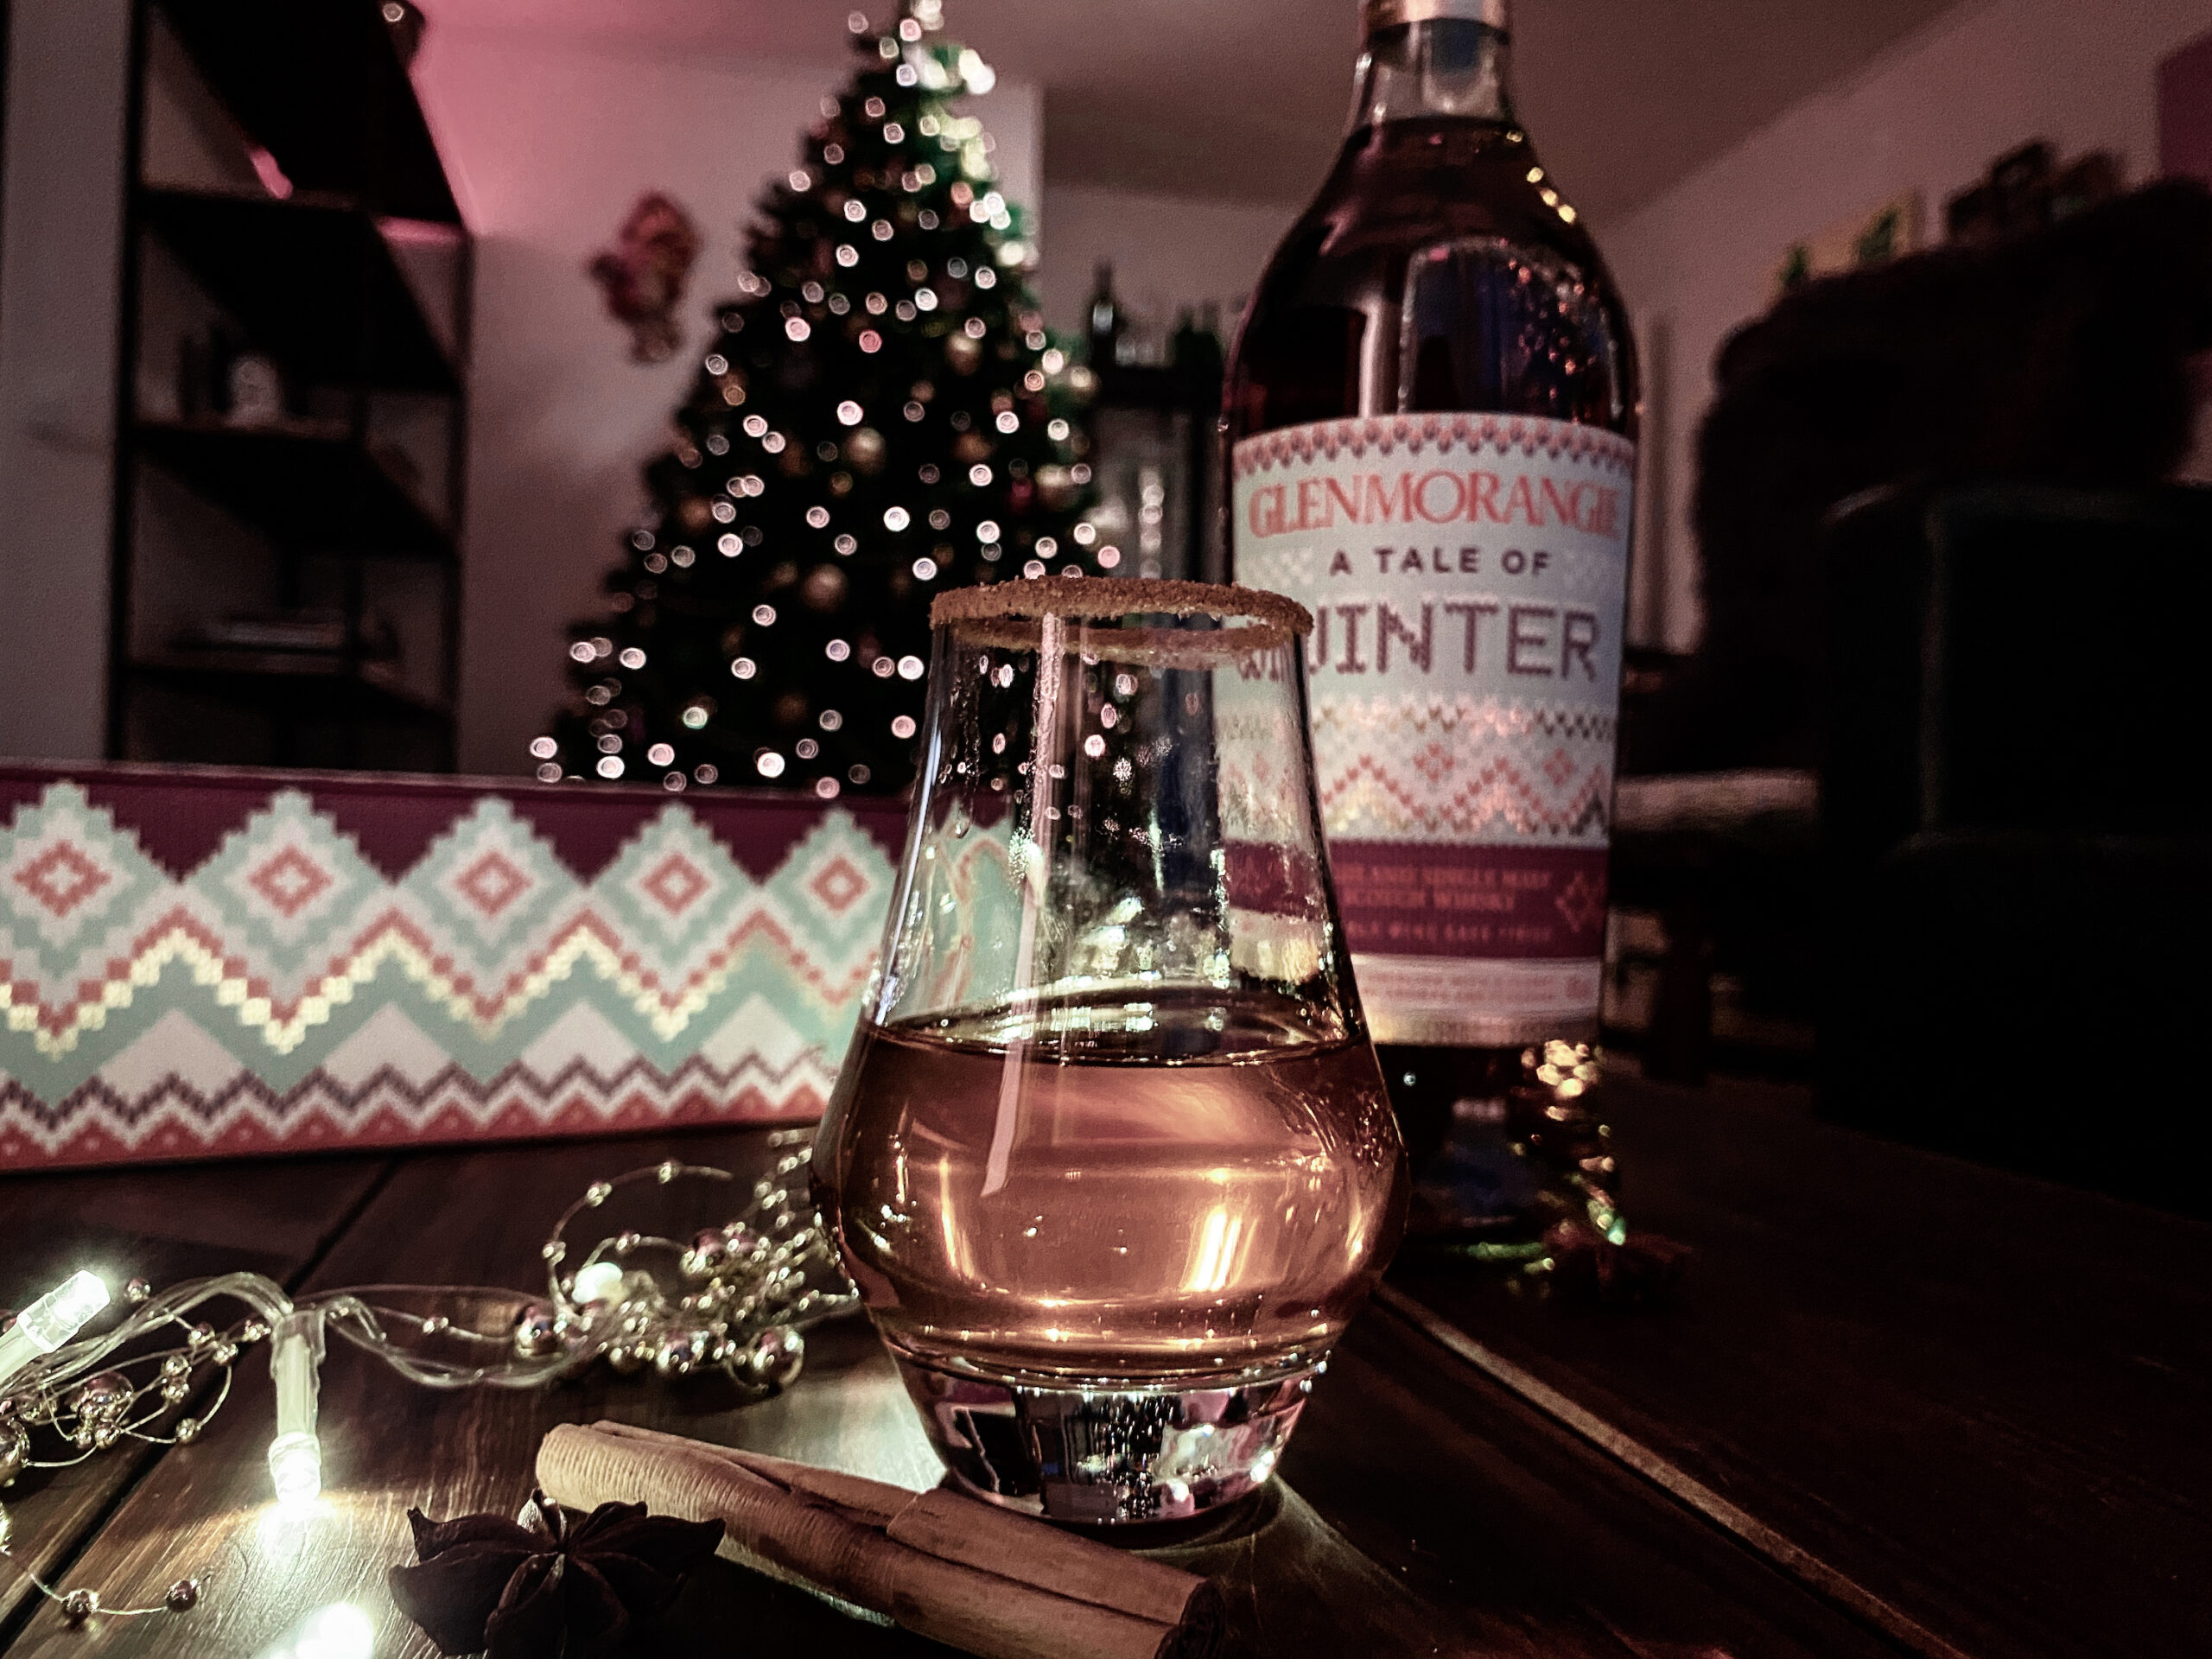 Glenmorangie A Tale of Winter – New Whisky for Frosty Days